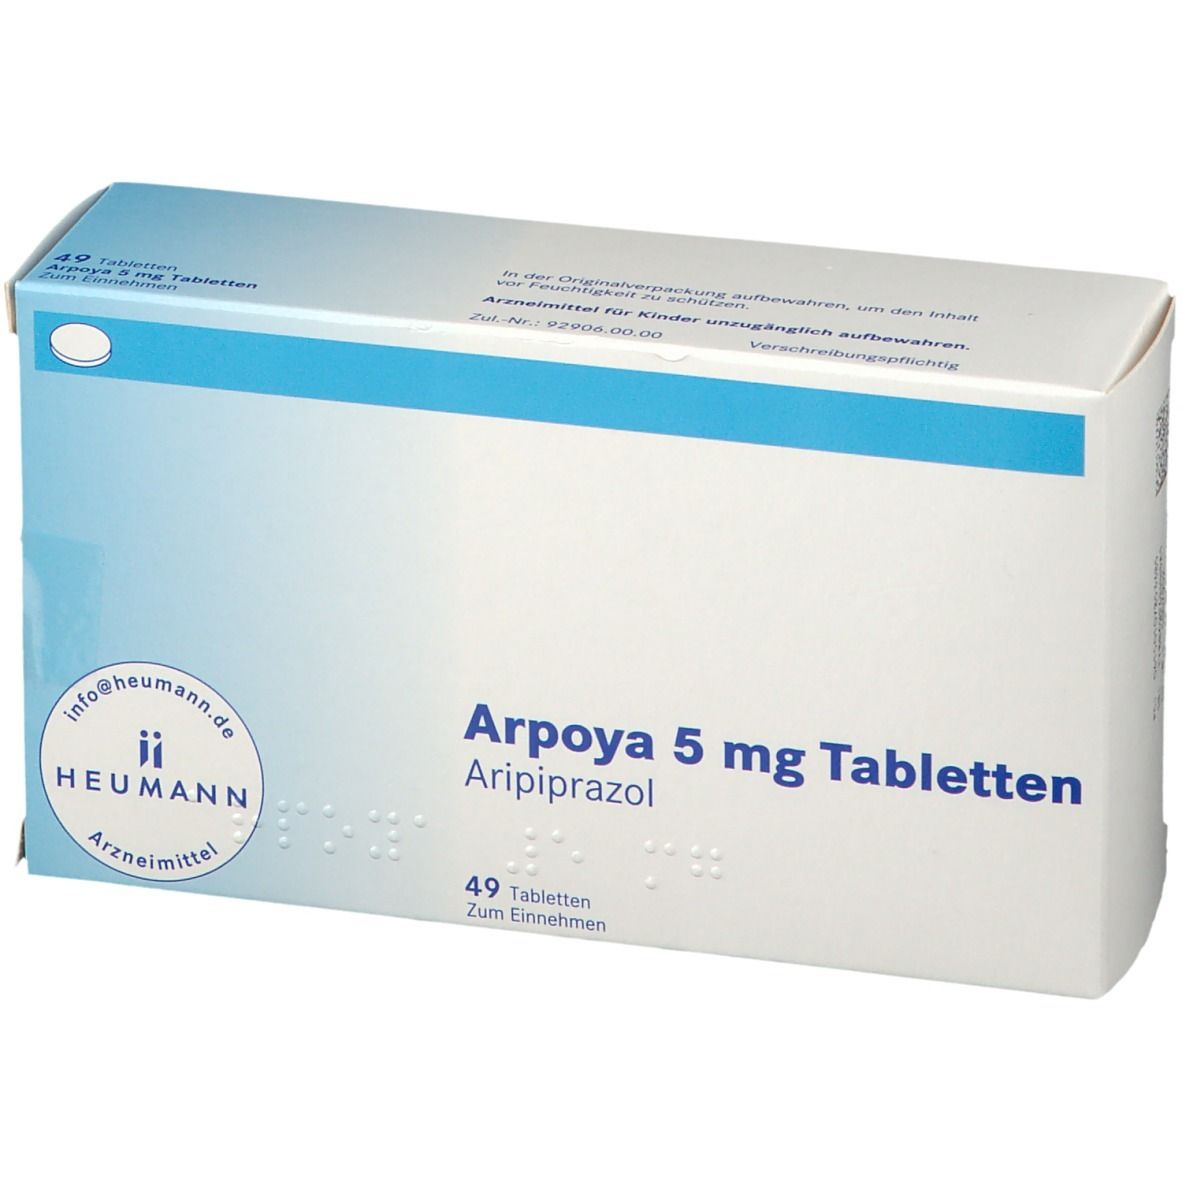 Arpoya 5 mg